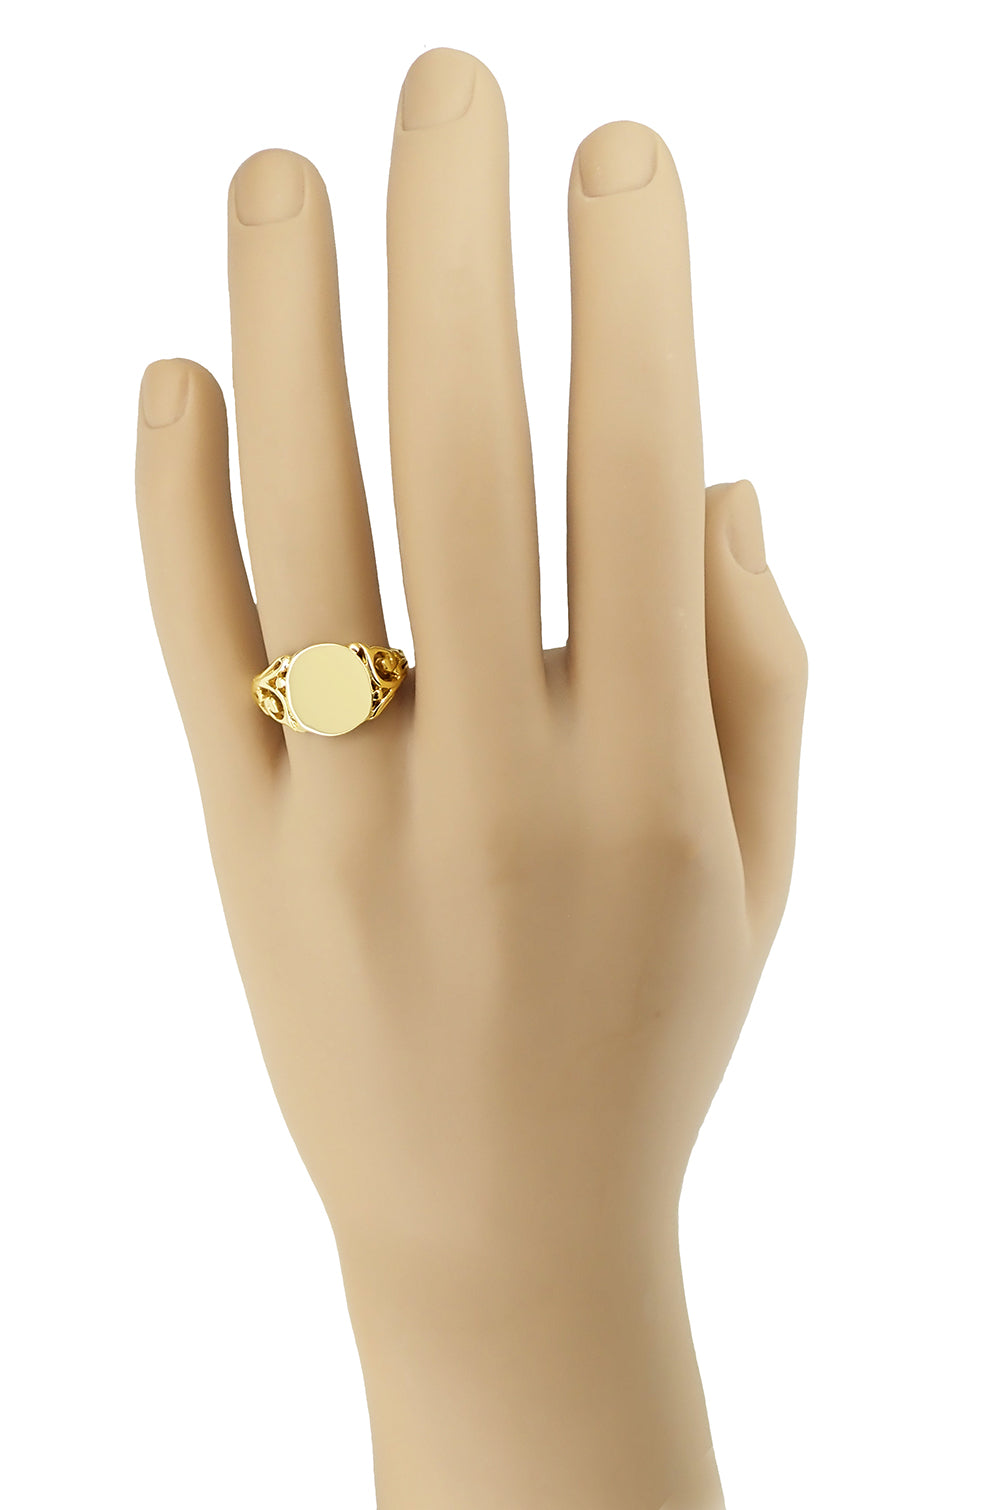 Mens Oval Victorian Filigree Scrolls Signet Ring in 14 Karat Yellow Gold - Item: MR111 - Image: 2